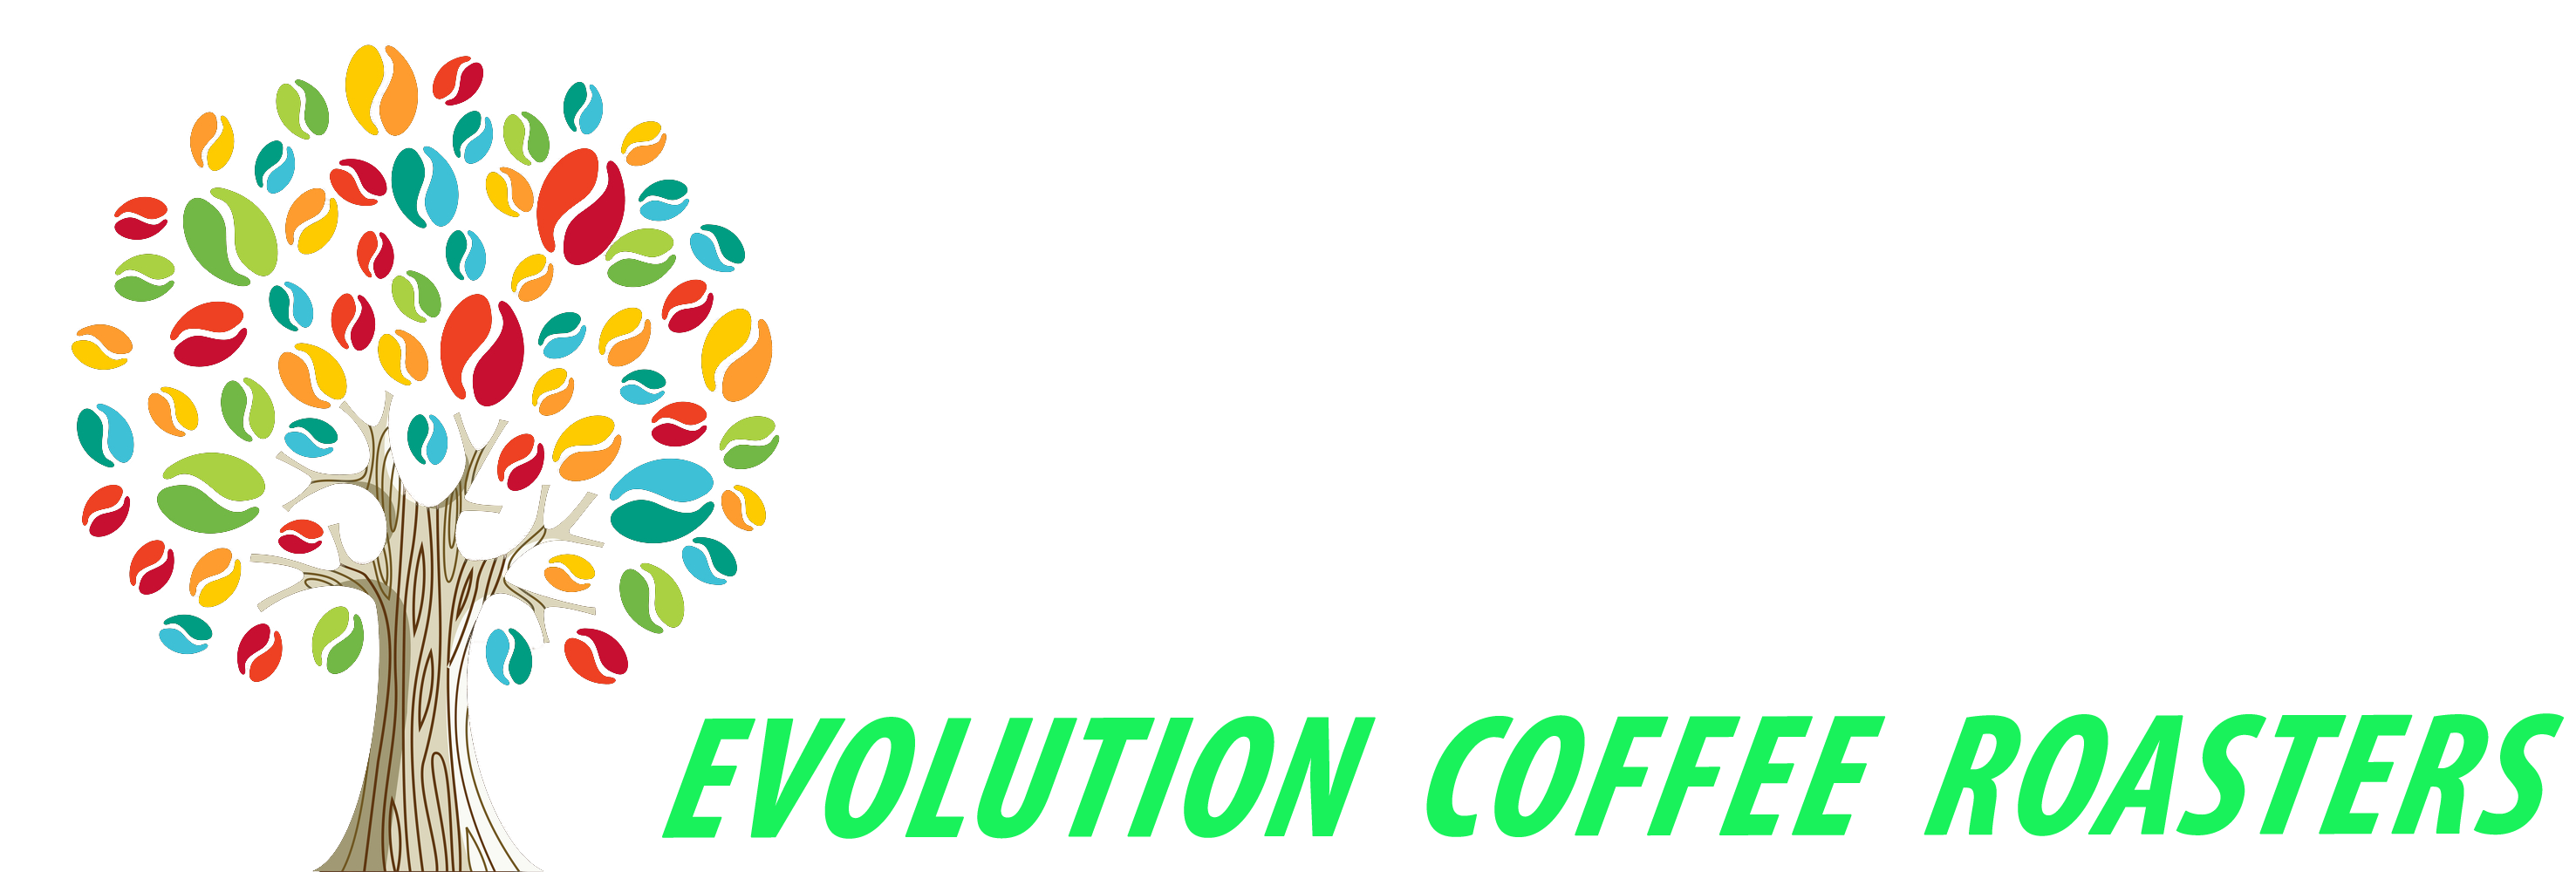 Special Coffee | Coffee roaster | Fresh Coffee | Evolution coffee roasters | Coffee